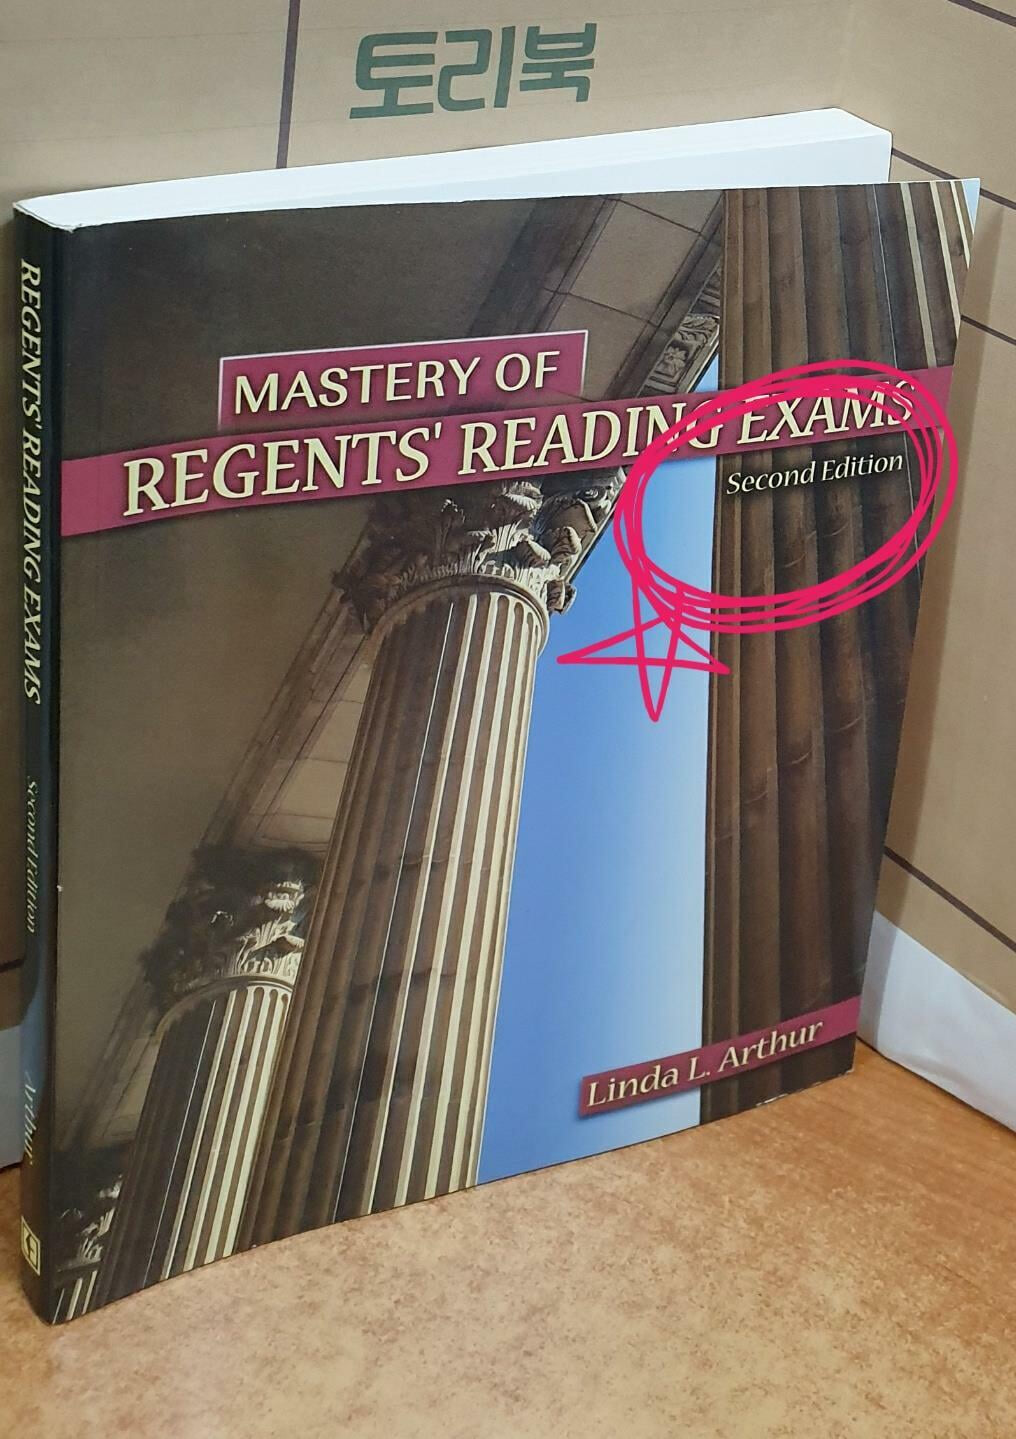 Mastery of Regents' Reading Exams 